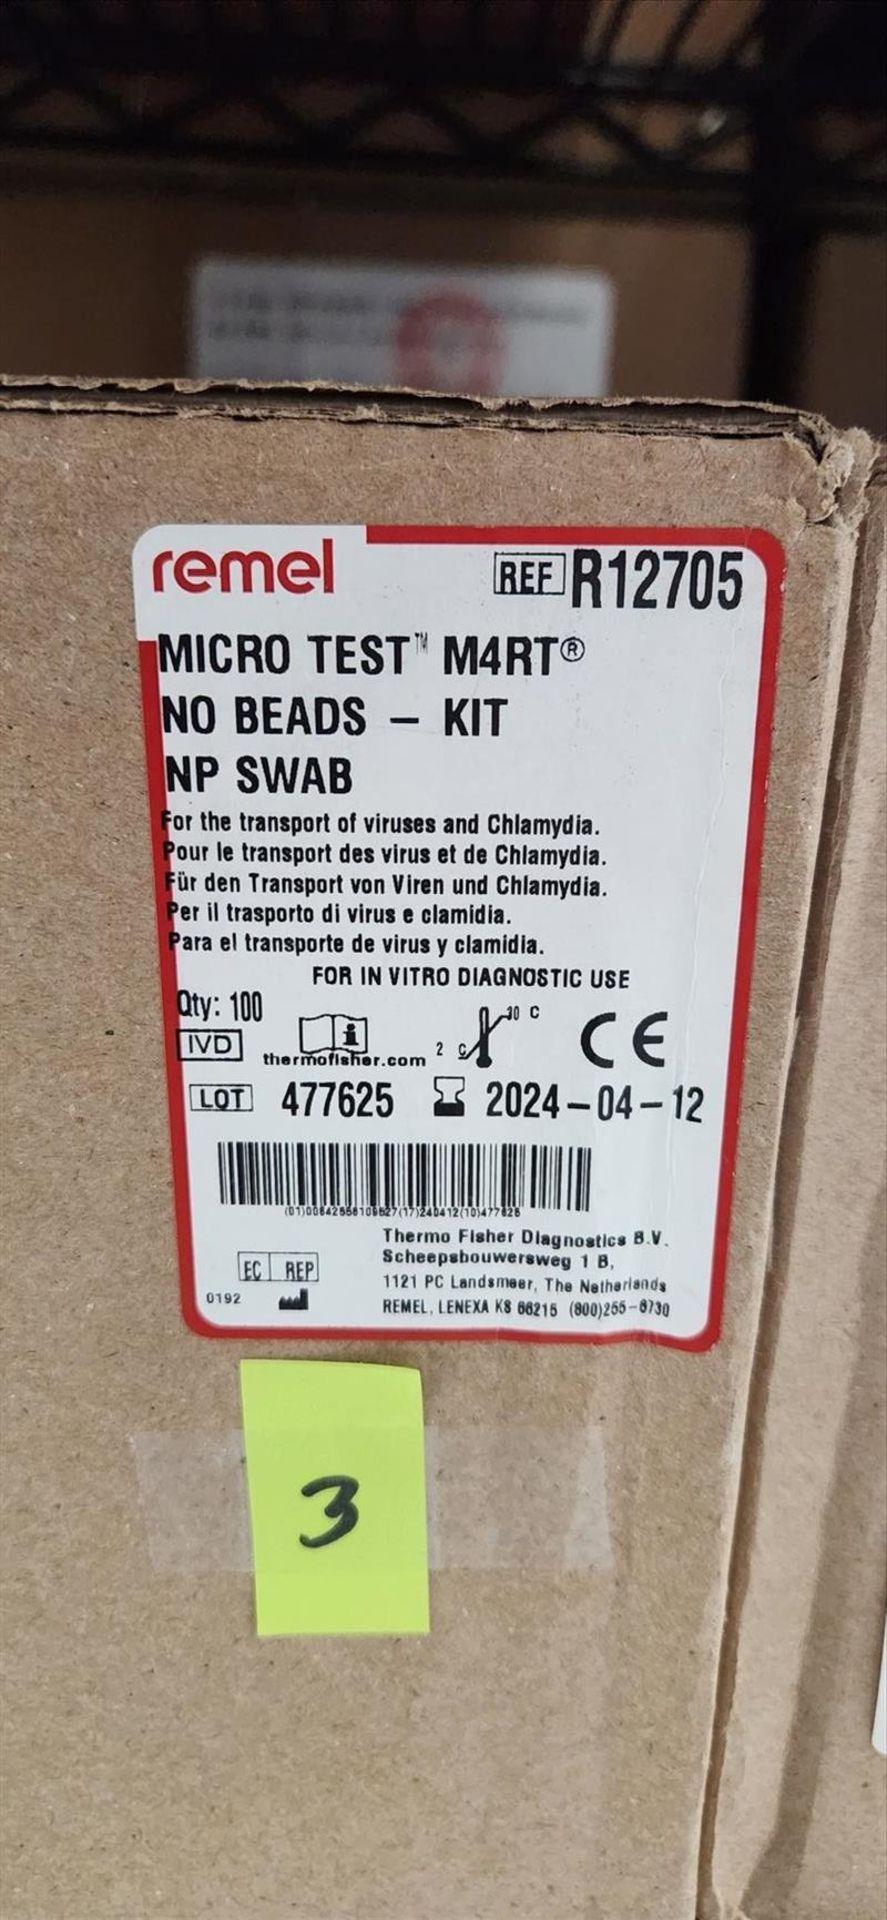 (16) Remel Micro Test M4RT No Beads Kits, 100 pcs per box - Image 2 of 2